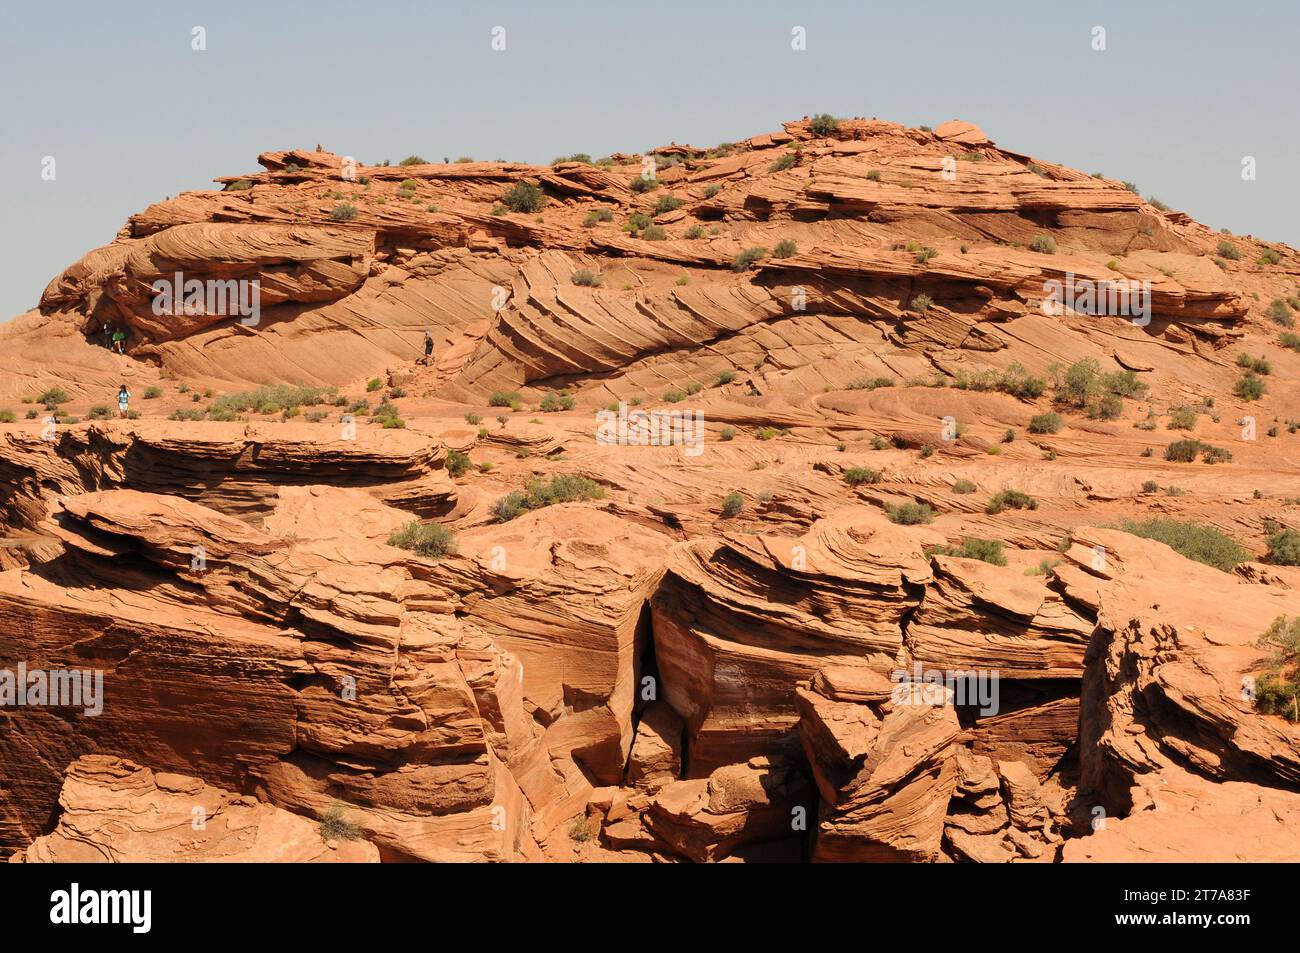 Cross-bedding sandstone. This photo was taken in Horseshoe Bend, Arizona, USA. Stock Photo